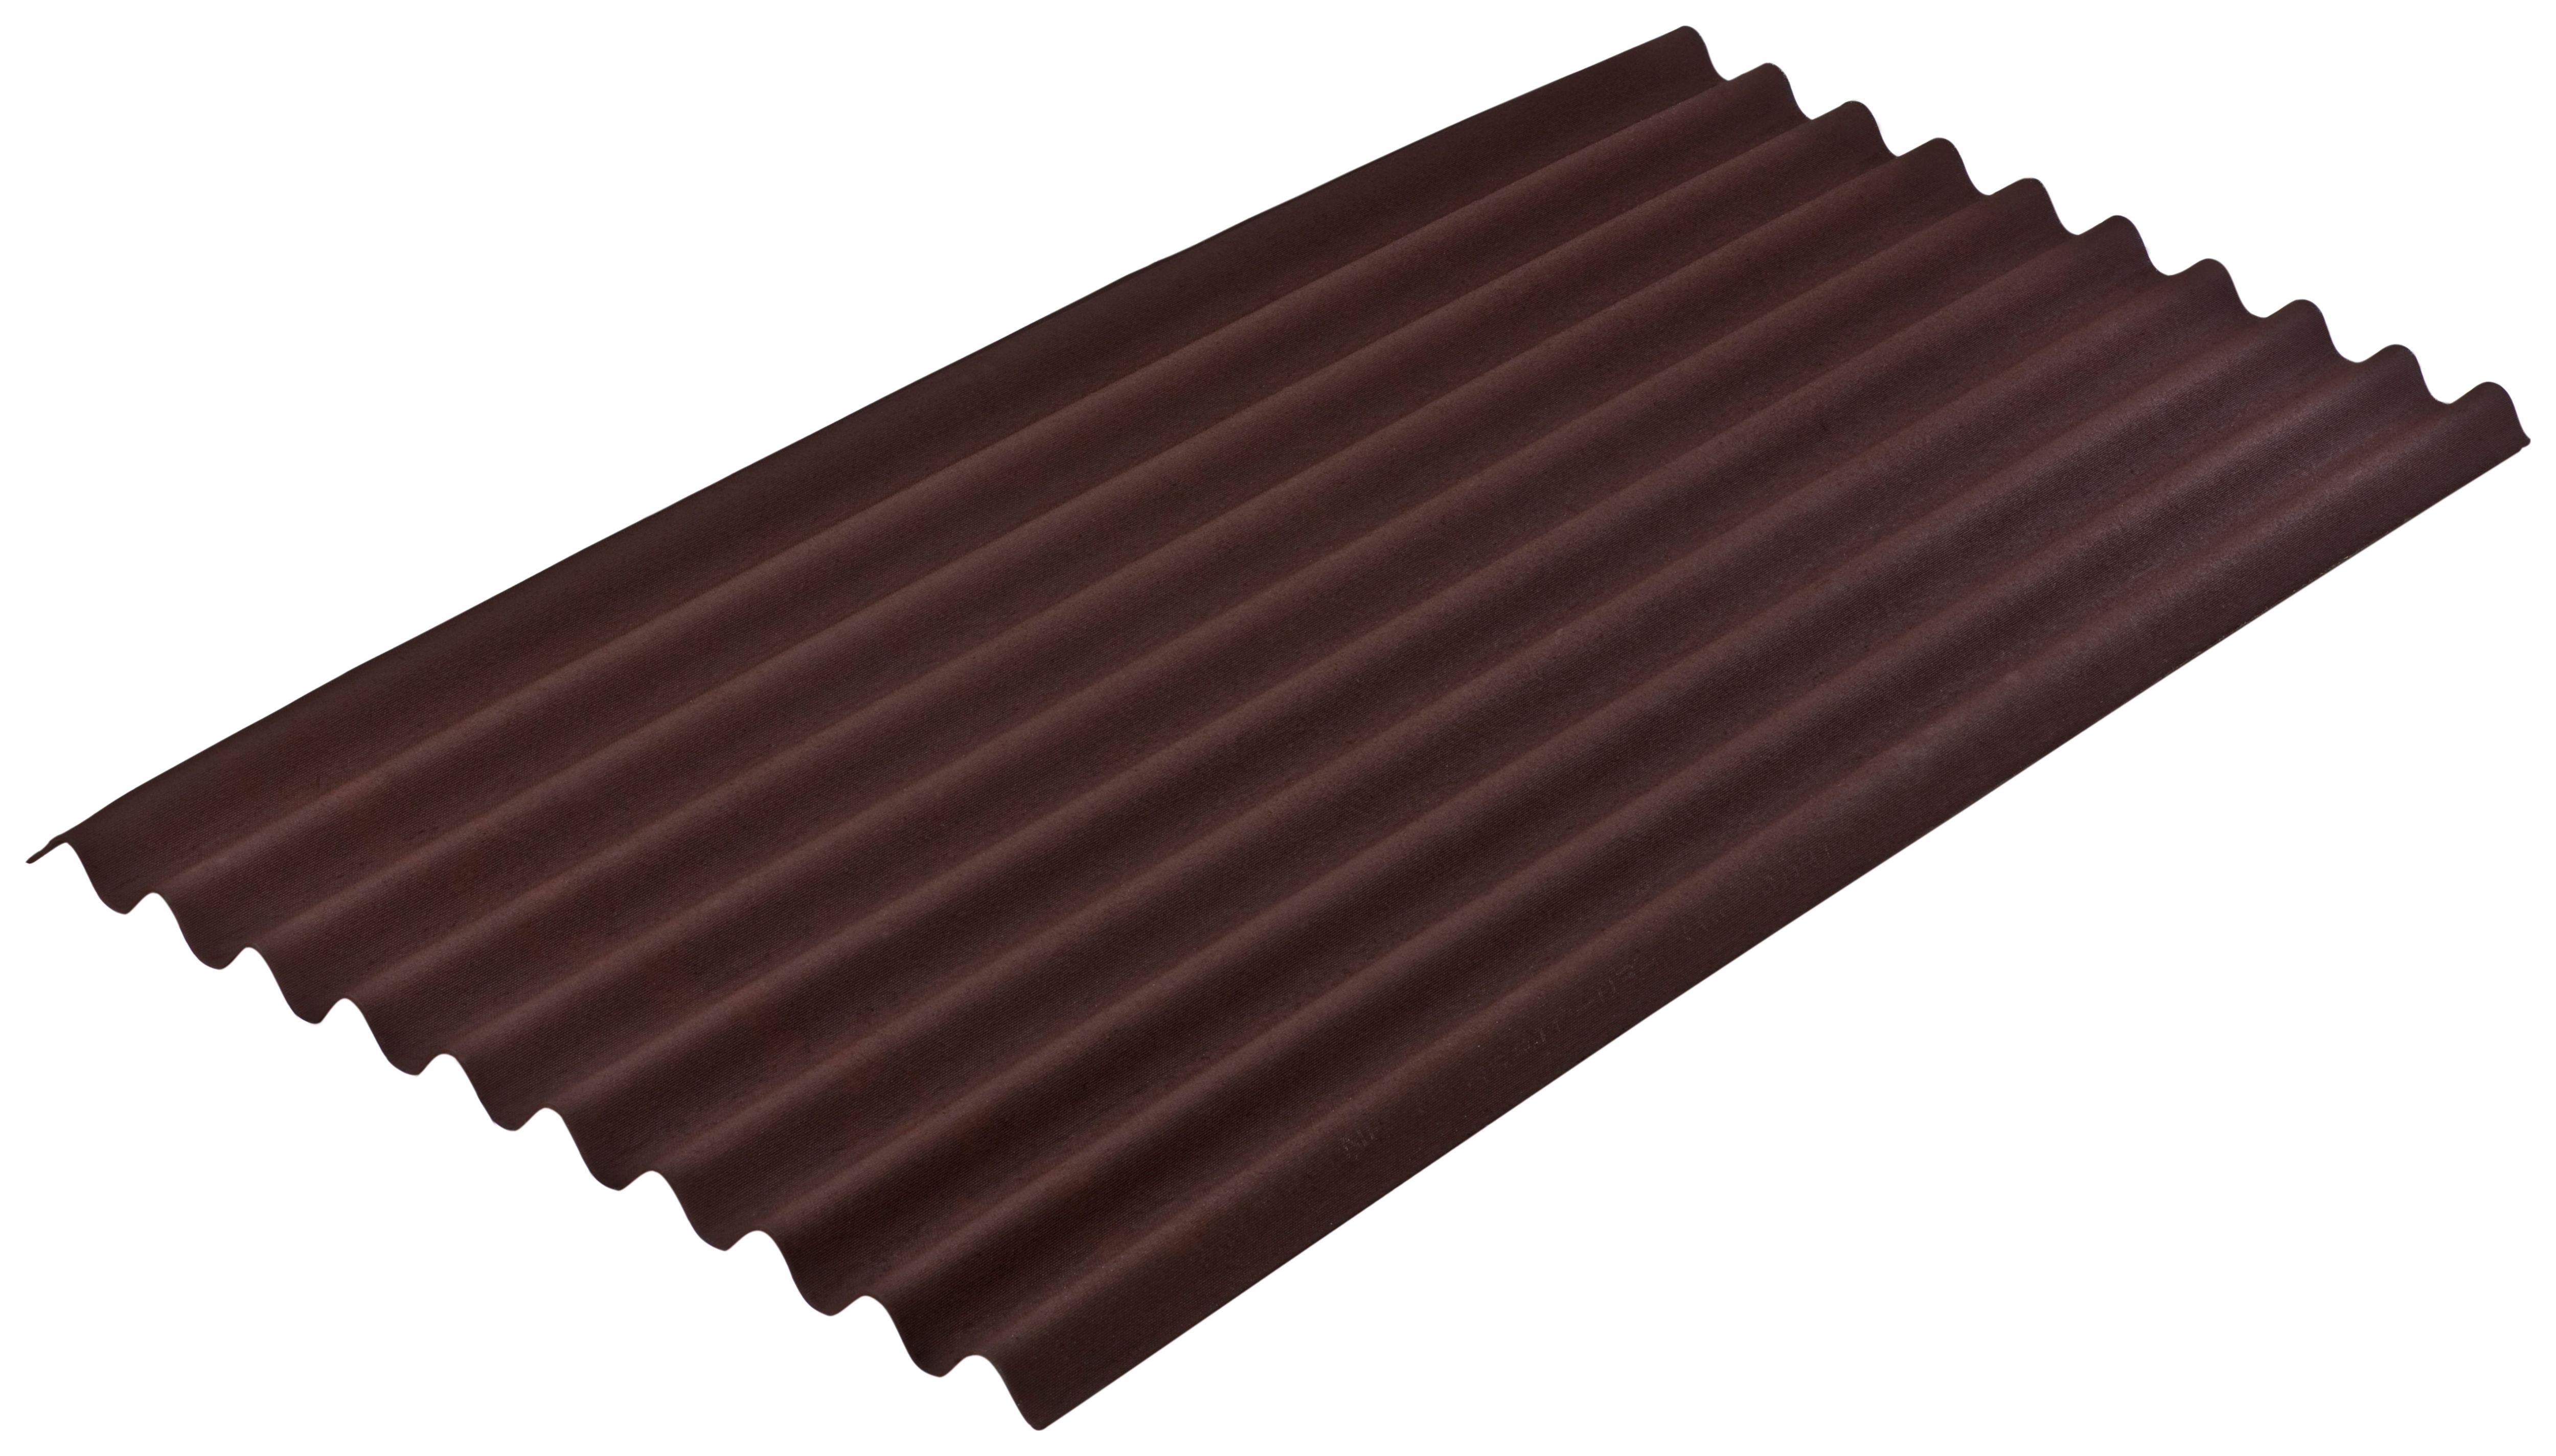 Image of Onduline Brown Bitumen Corrugated Roof Sheet - 950mm x 2000mm x 3mm